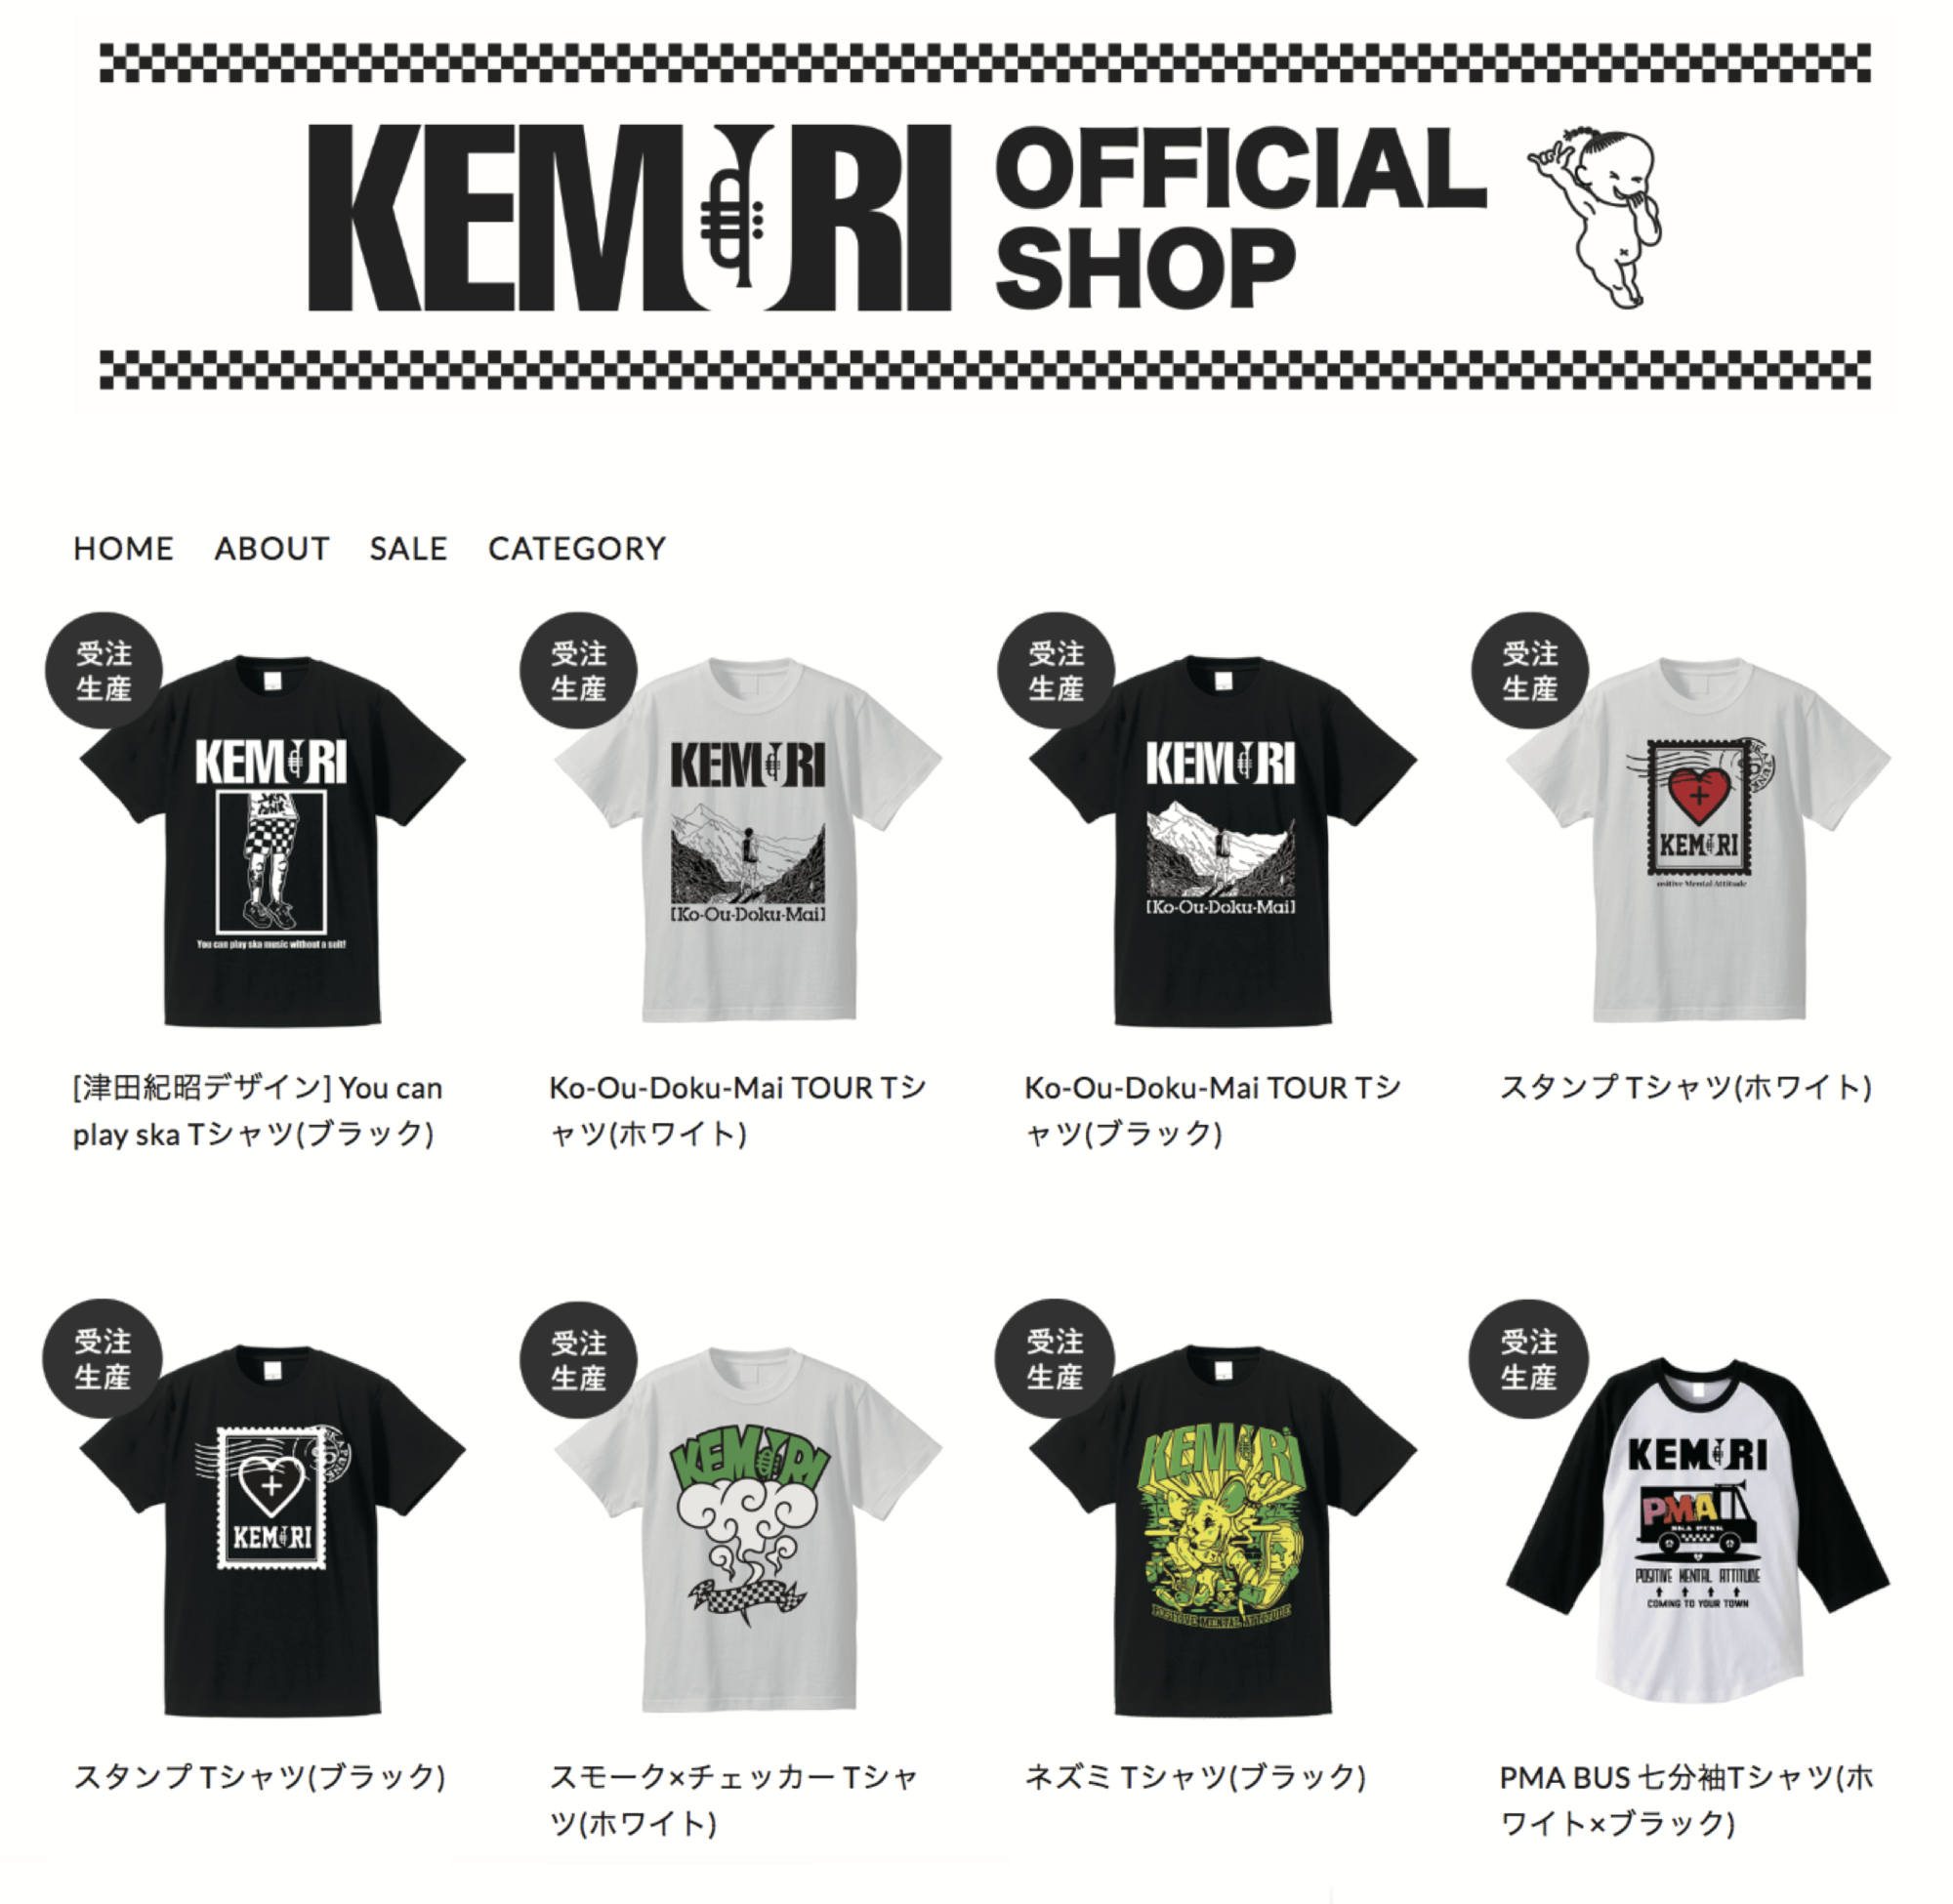 Ko-Ou-Doku-Mai TOUR」で販売したTシャツの通販受注を開始！ | KEMURI